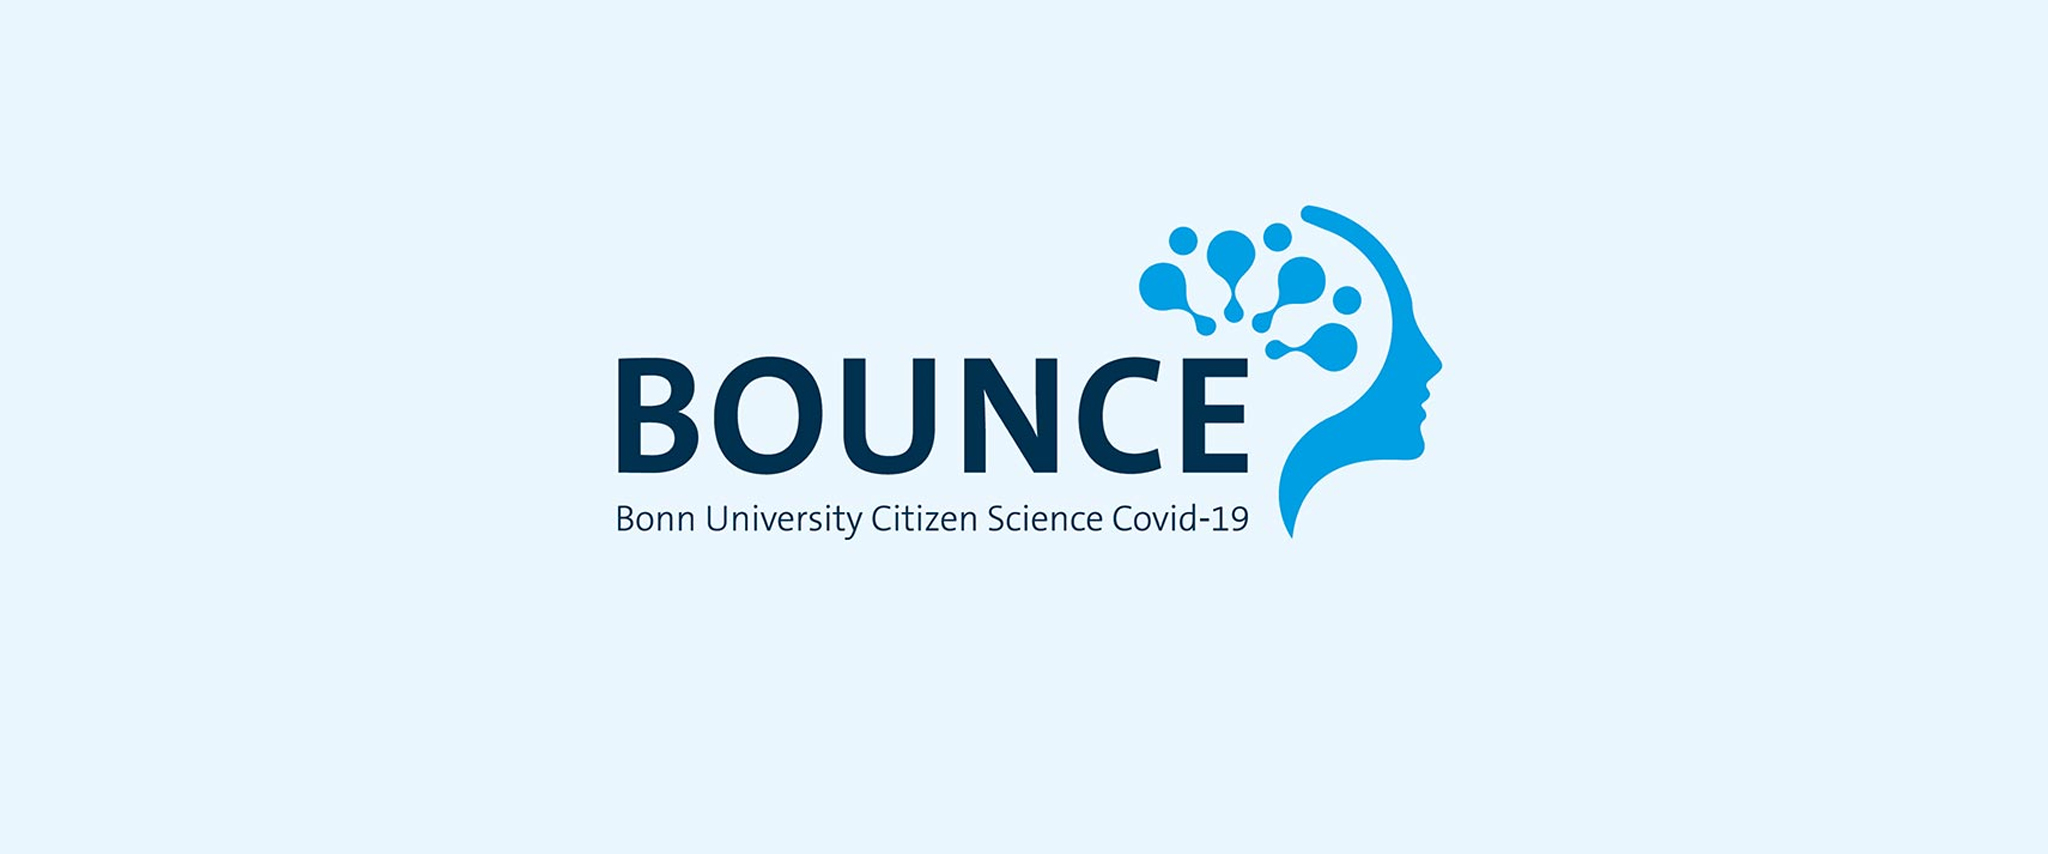 Universitätsklinikum Bonn Citizen Science COVID-19 Symposium